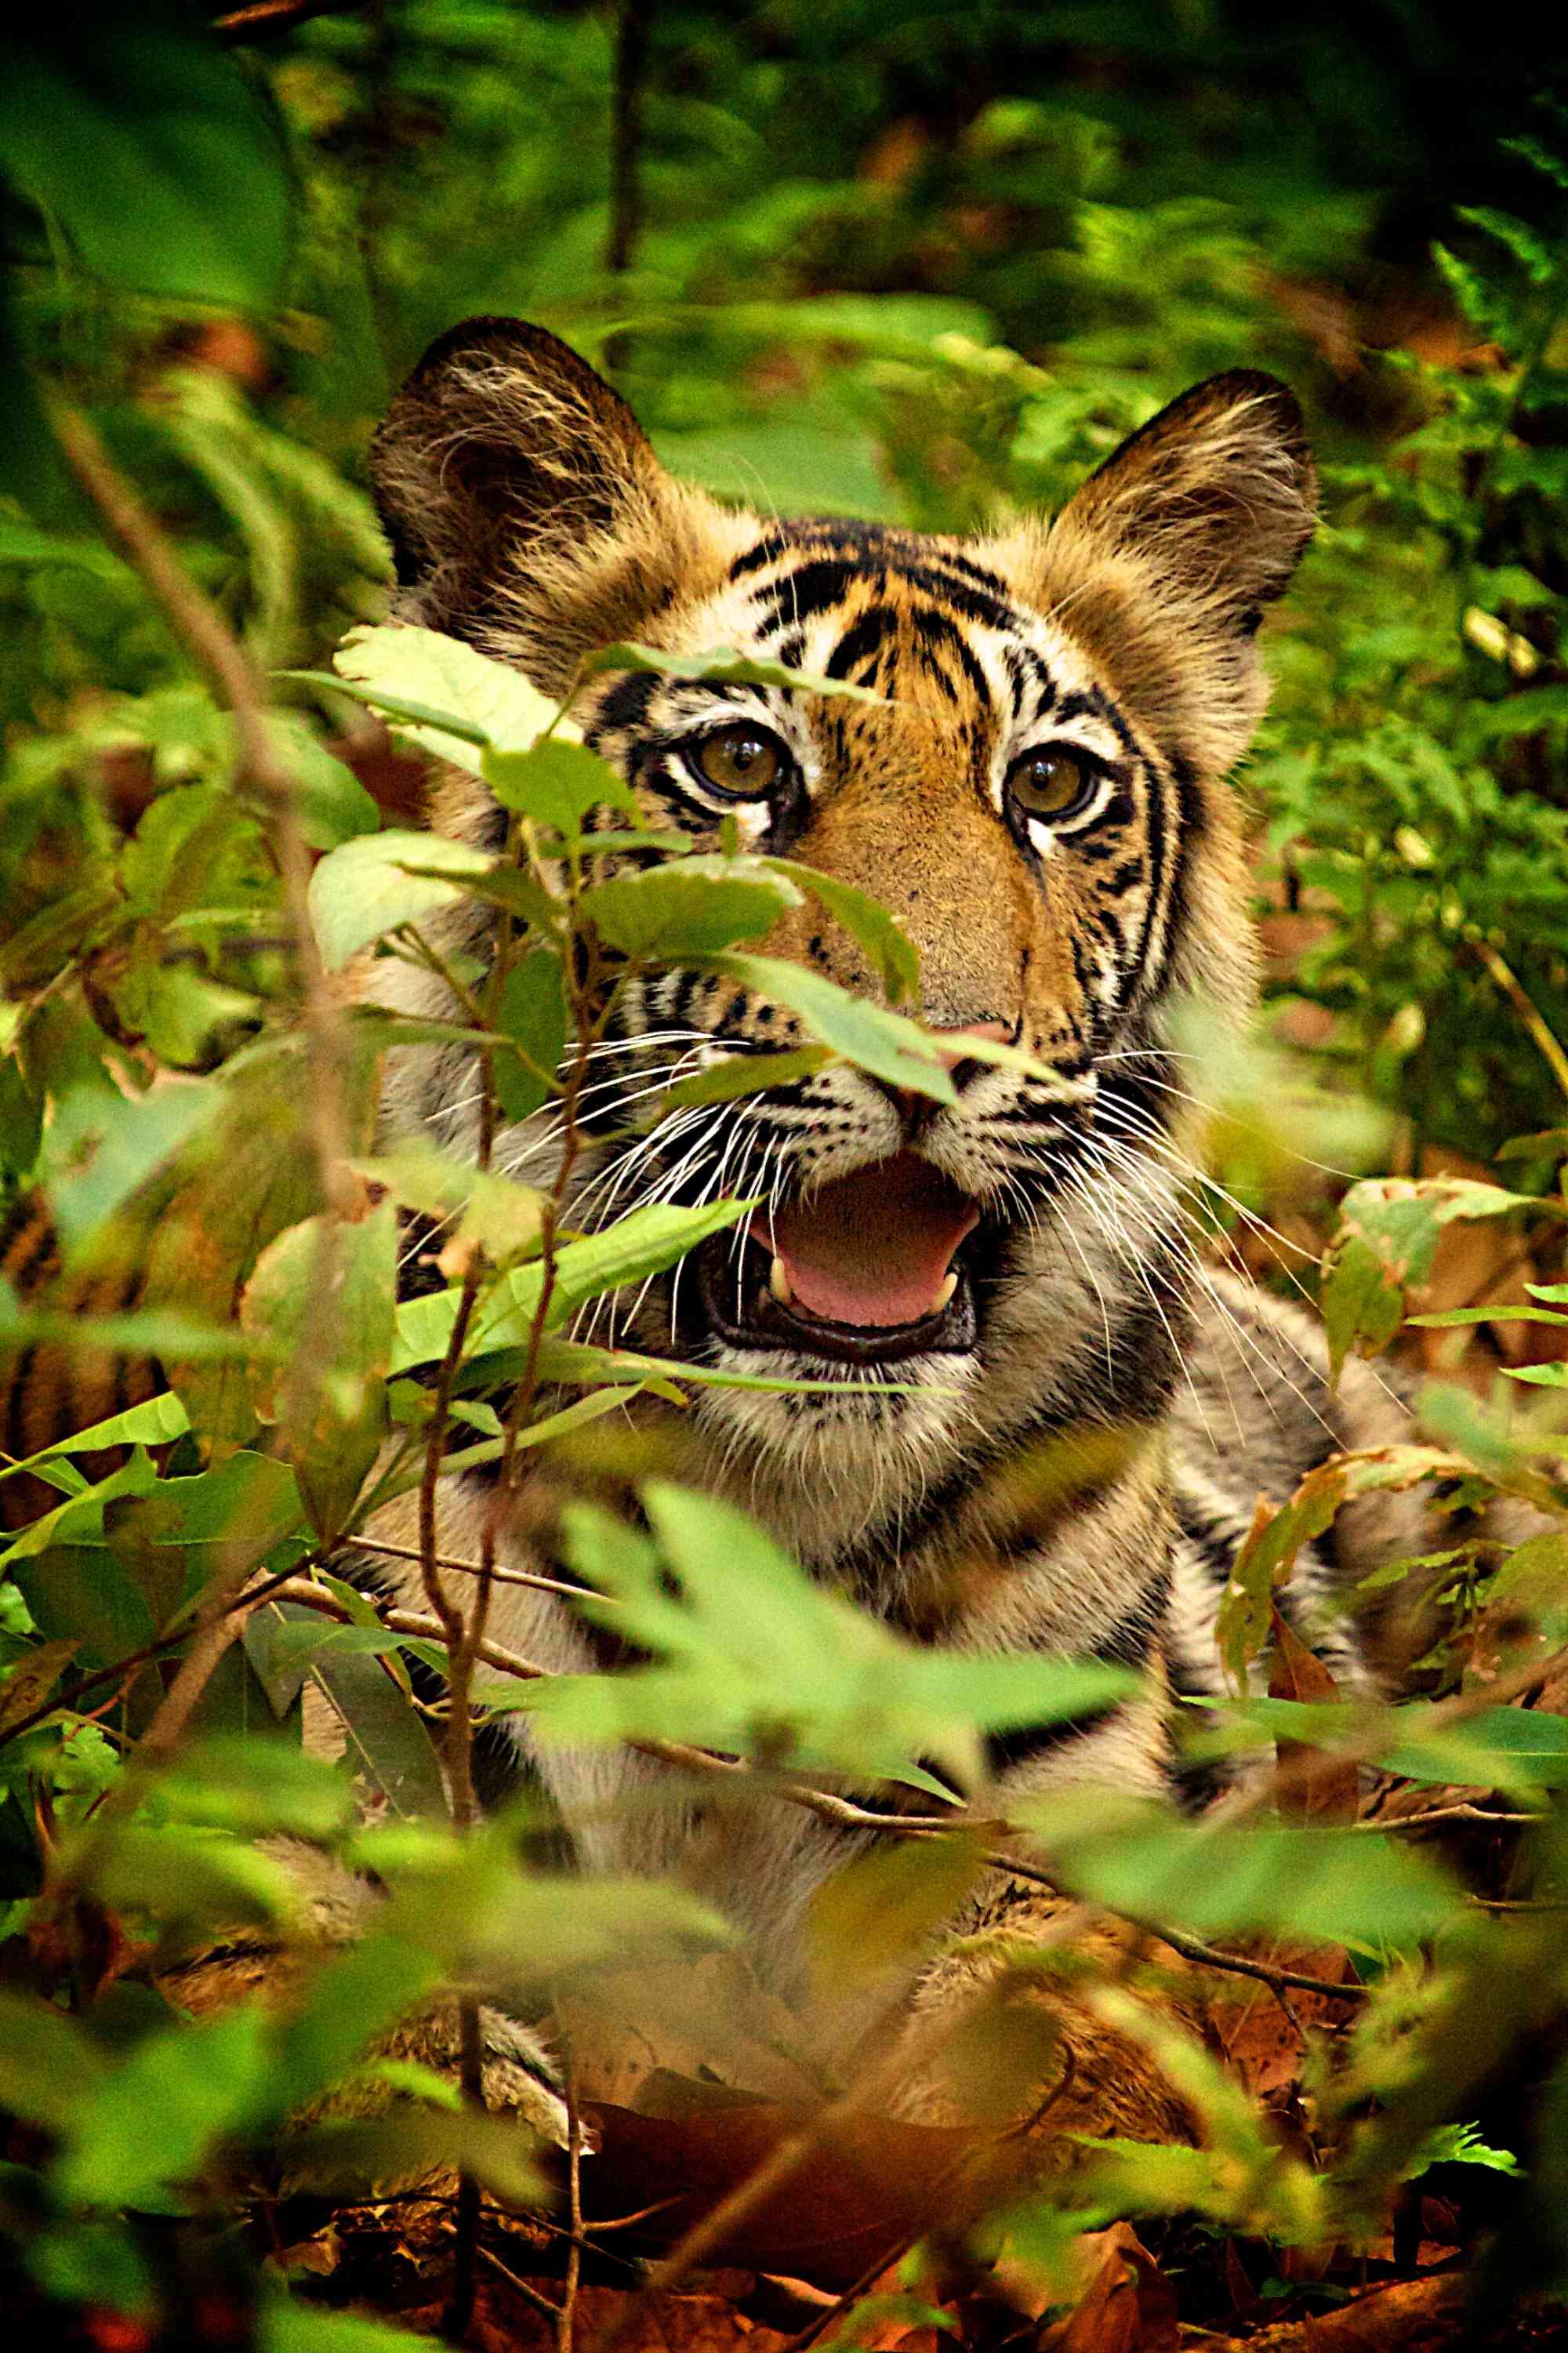 Tiger cub in Bandhavgarh